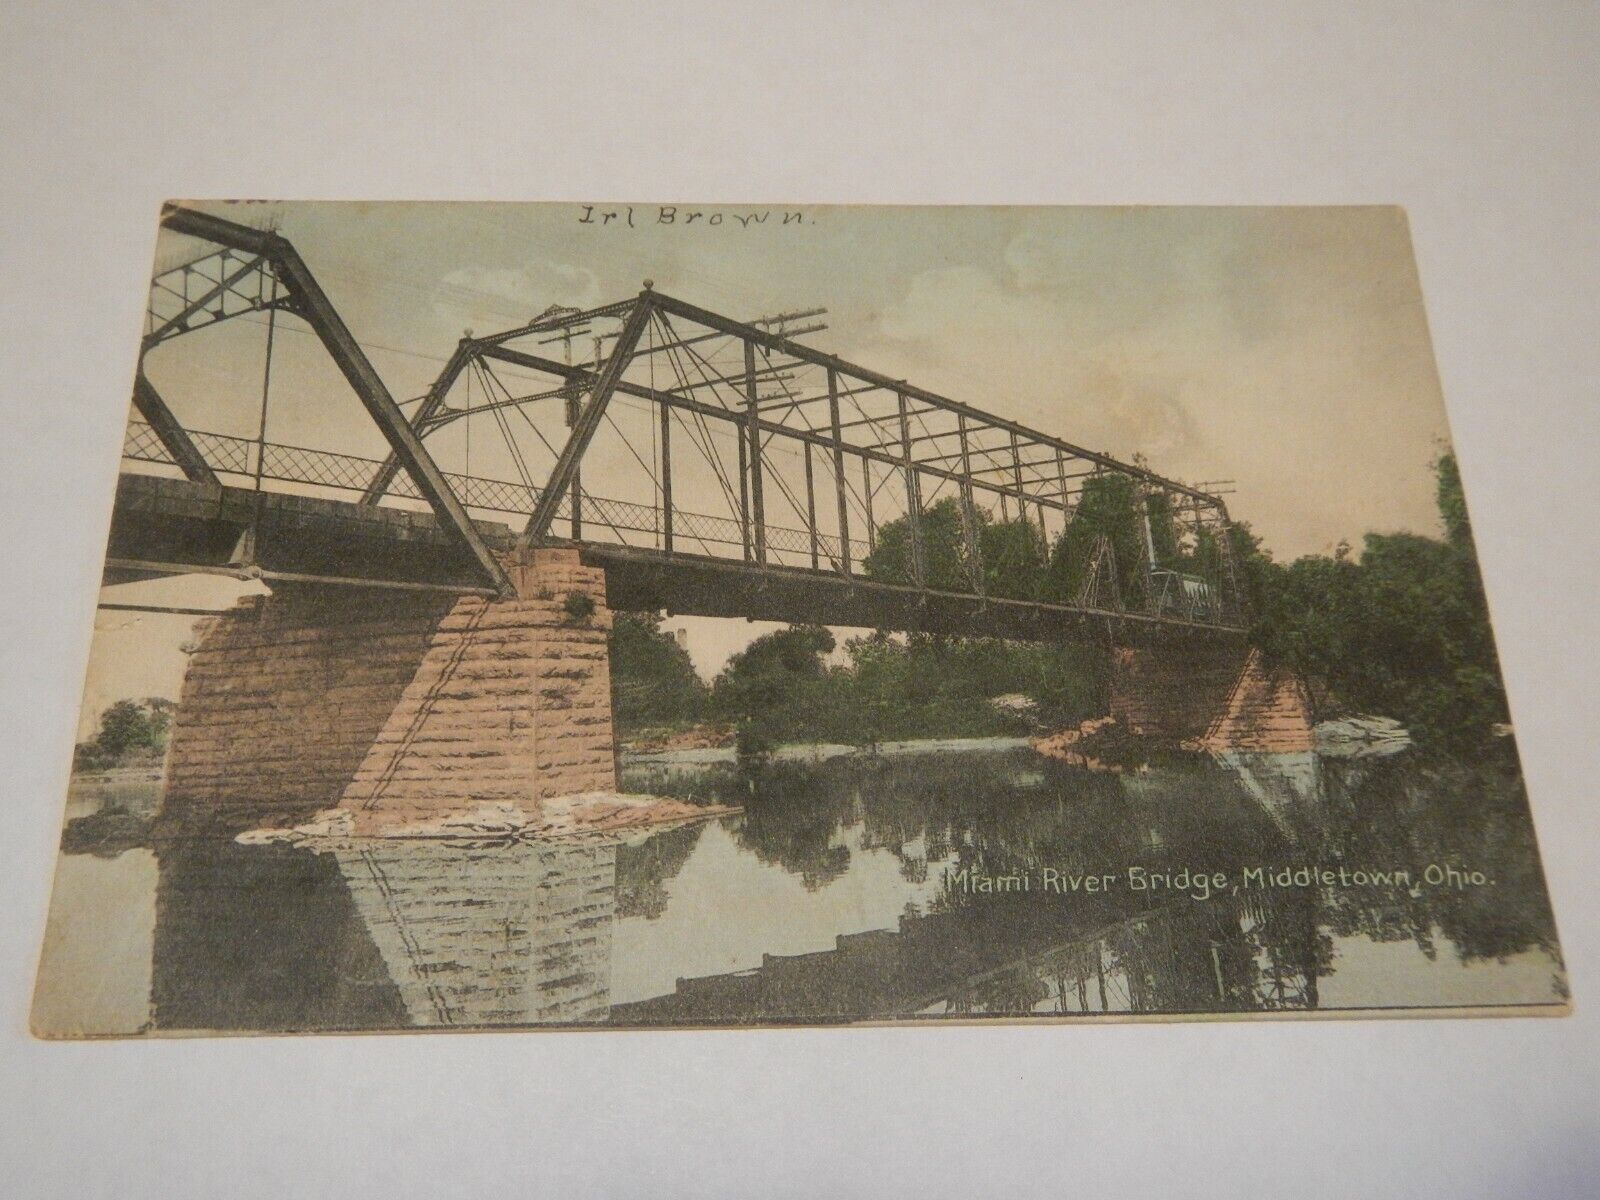 Miami River Bridge Middletown OH Ohio Postcard 1 cent Stamp Postmarked